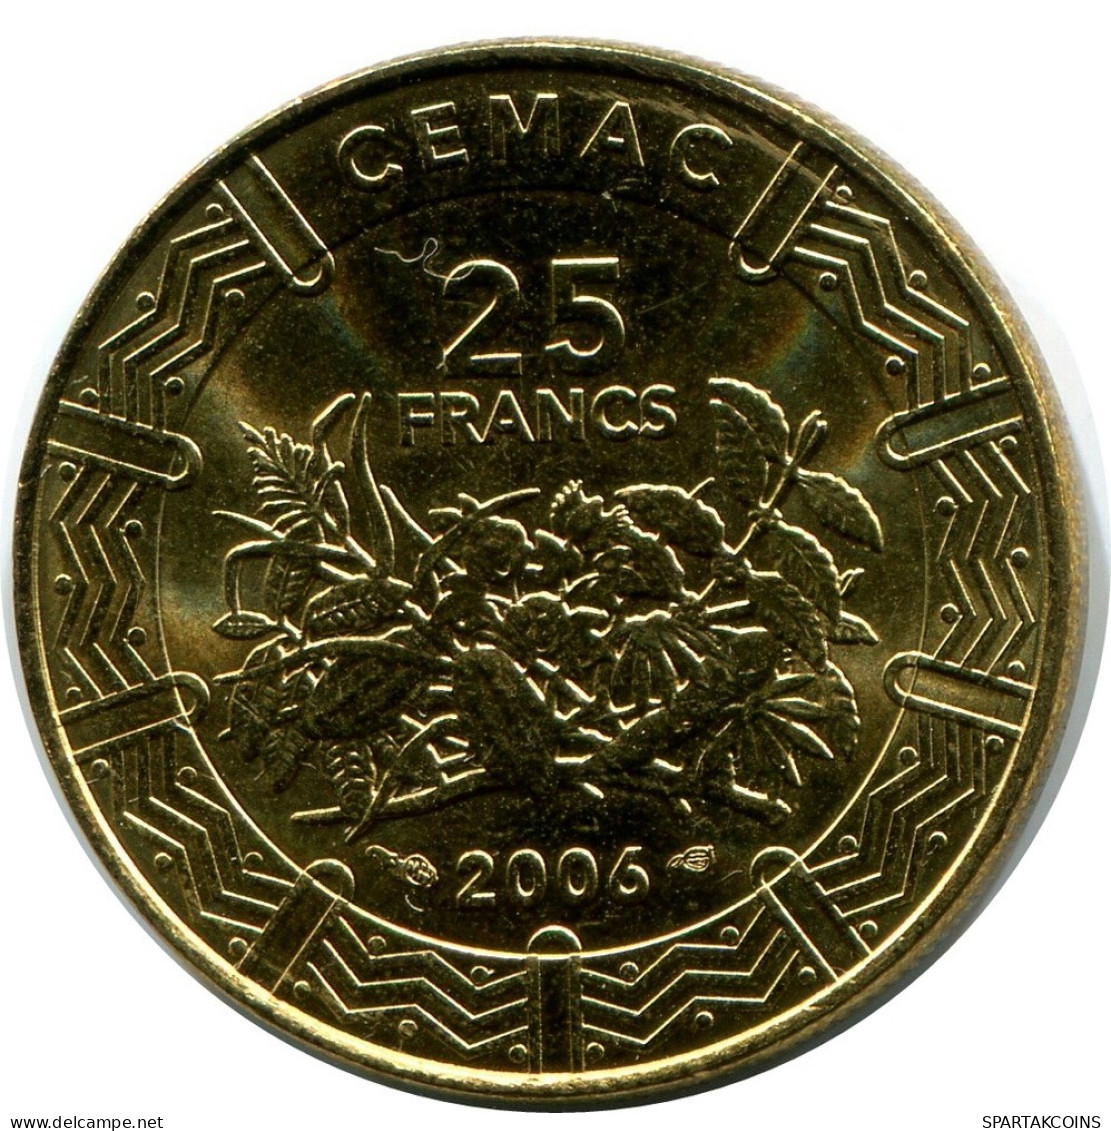 25 FRANCS CFA 2006 ESTADOS DE ÁFRICA CENTRAL (BEAC) Moneda #AP863.E.A - República Centroafricana